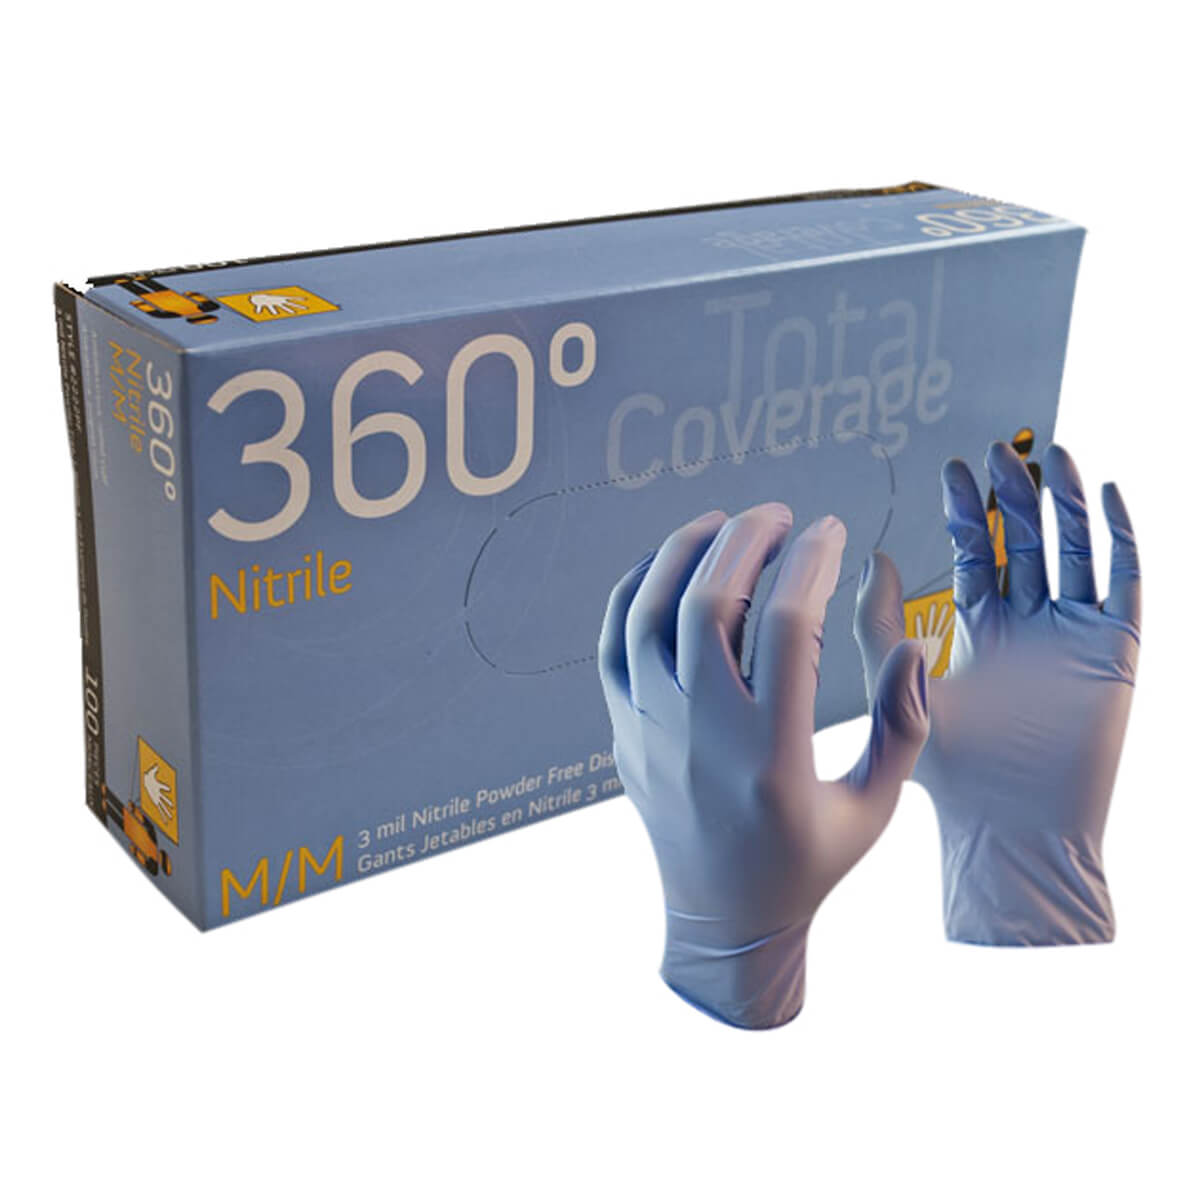 360° Total Coverage Gloves - 3 mil - 100 pack